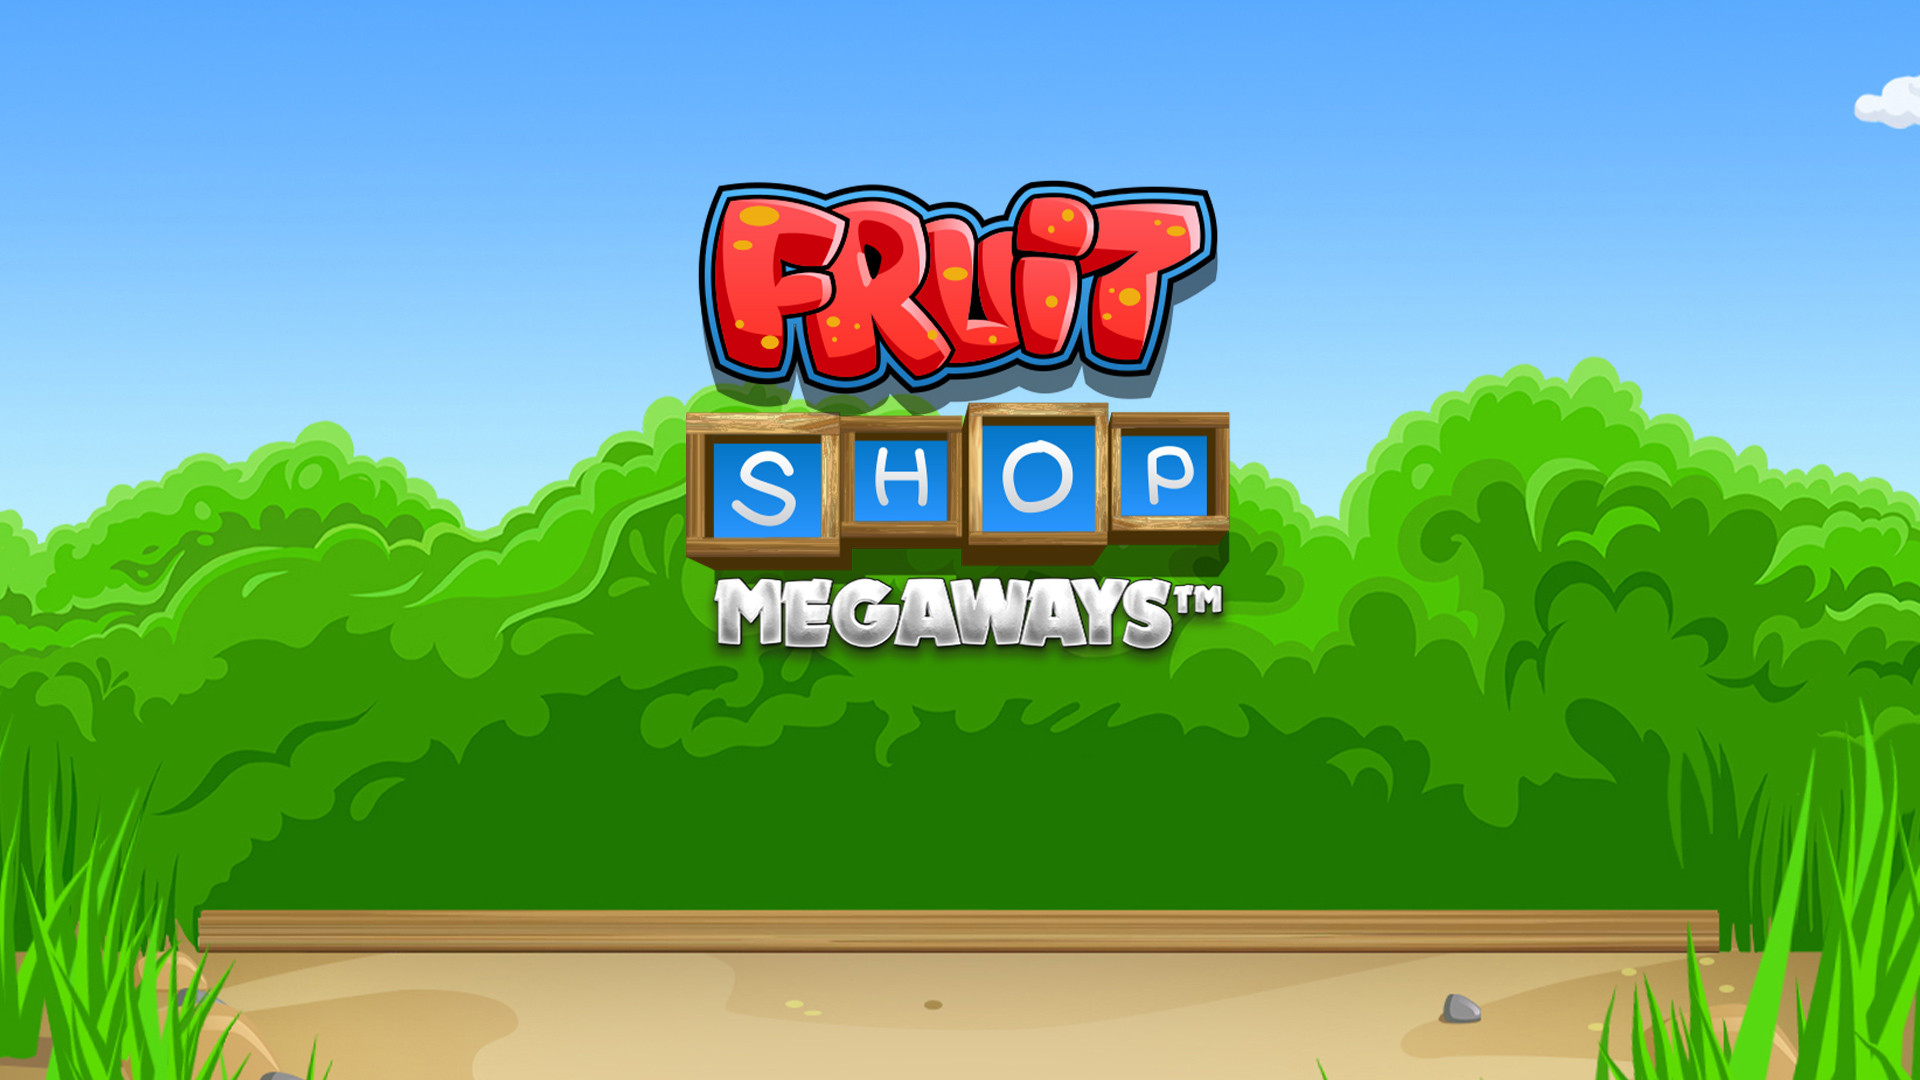 Fruit Shop MEGAWAYS